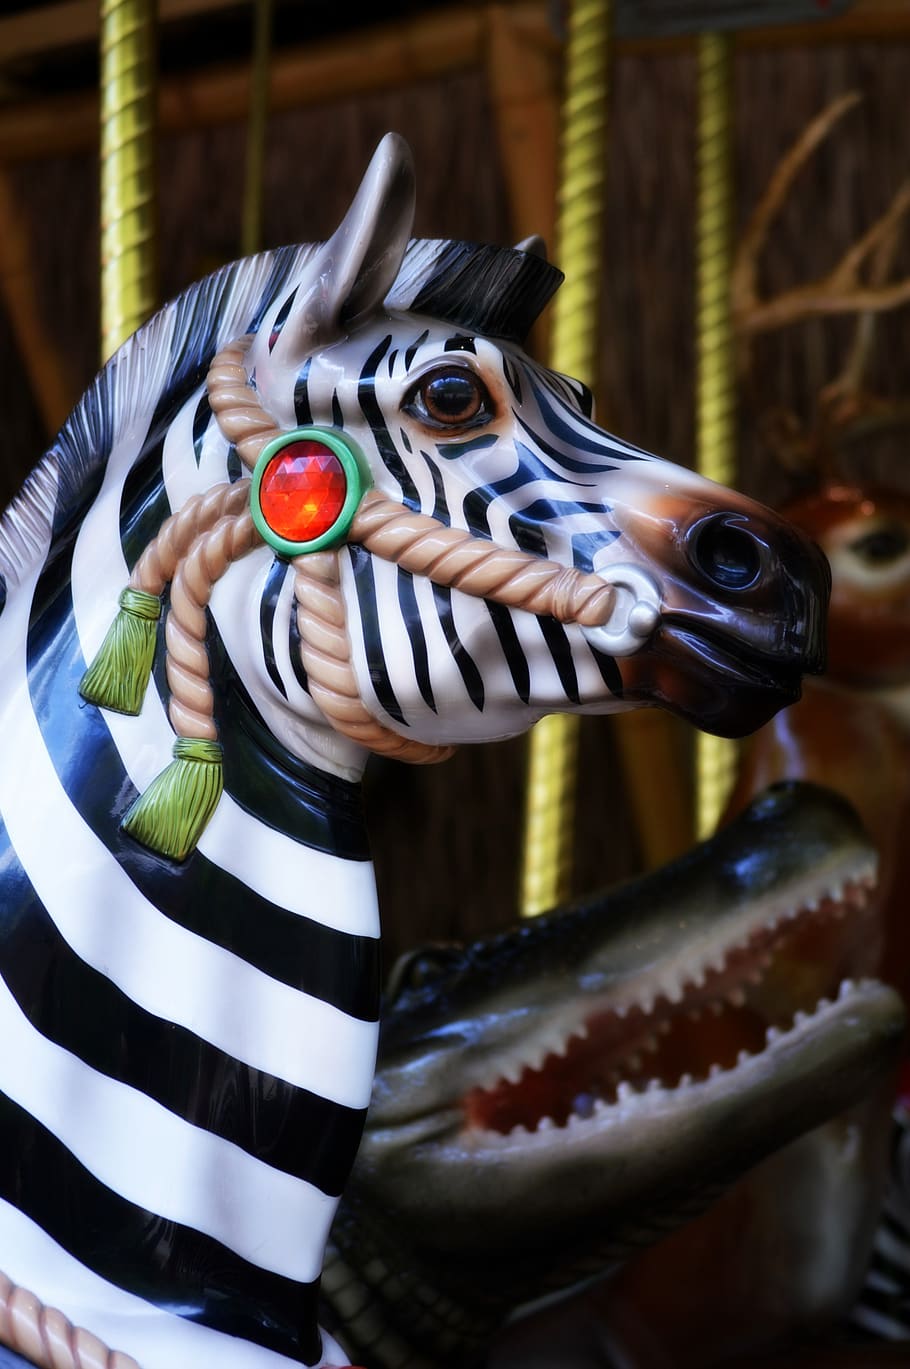 carousel, zebra, ride, entertainment, amusement, merry-go-round, fun, fair, festival, summer